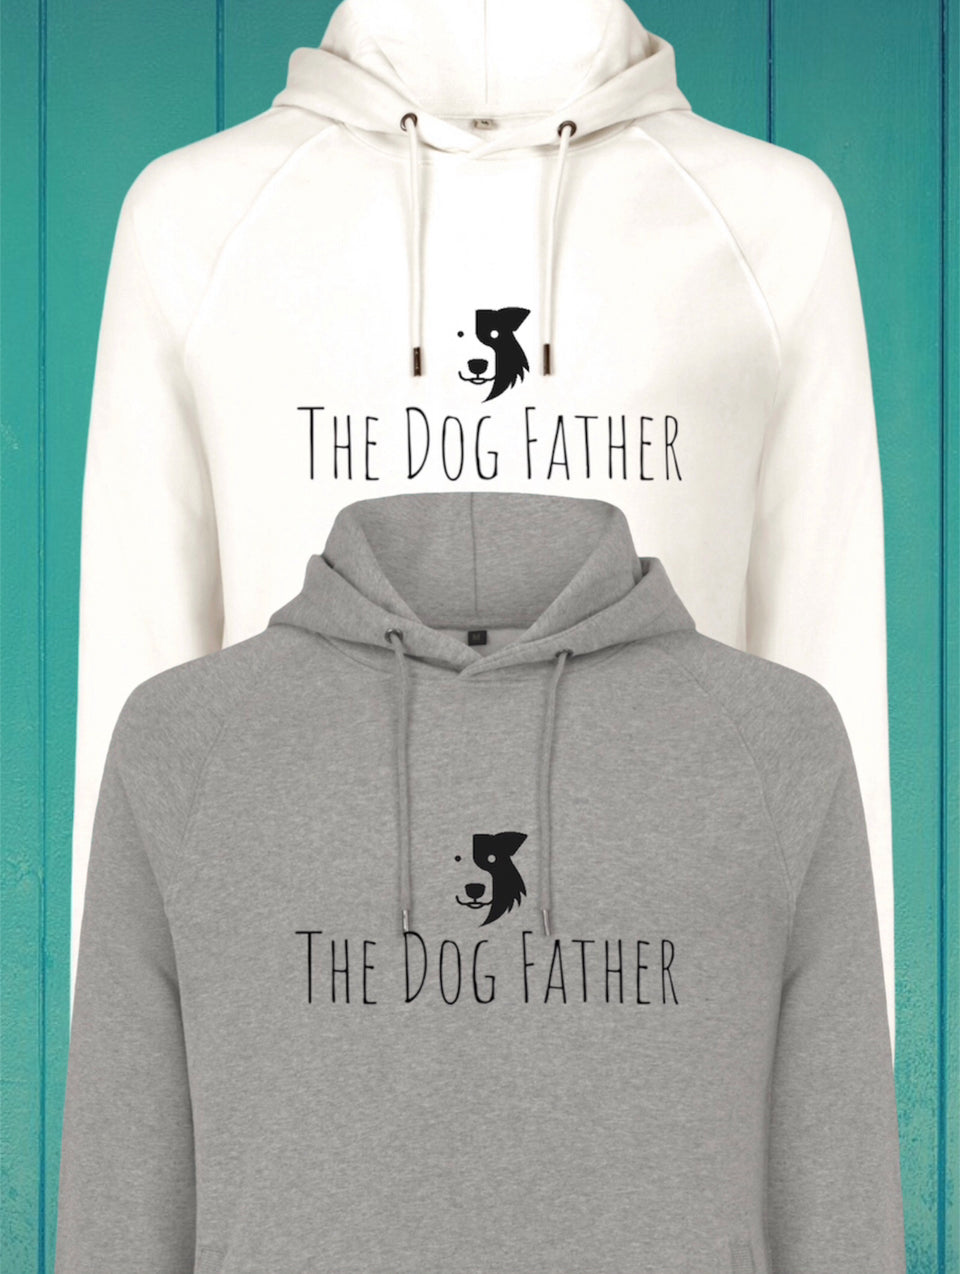 The Dog Father - Unisex Organic Hoody